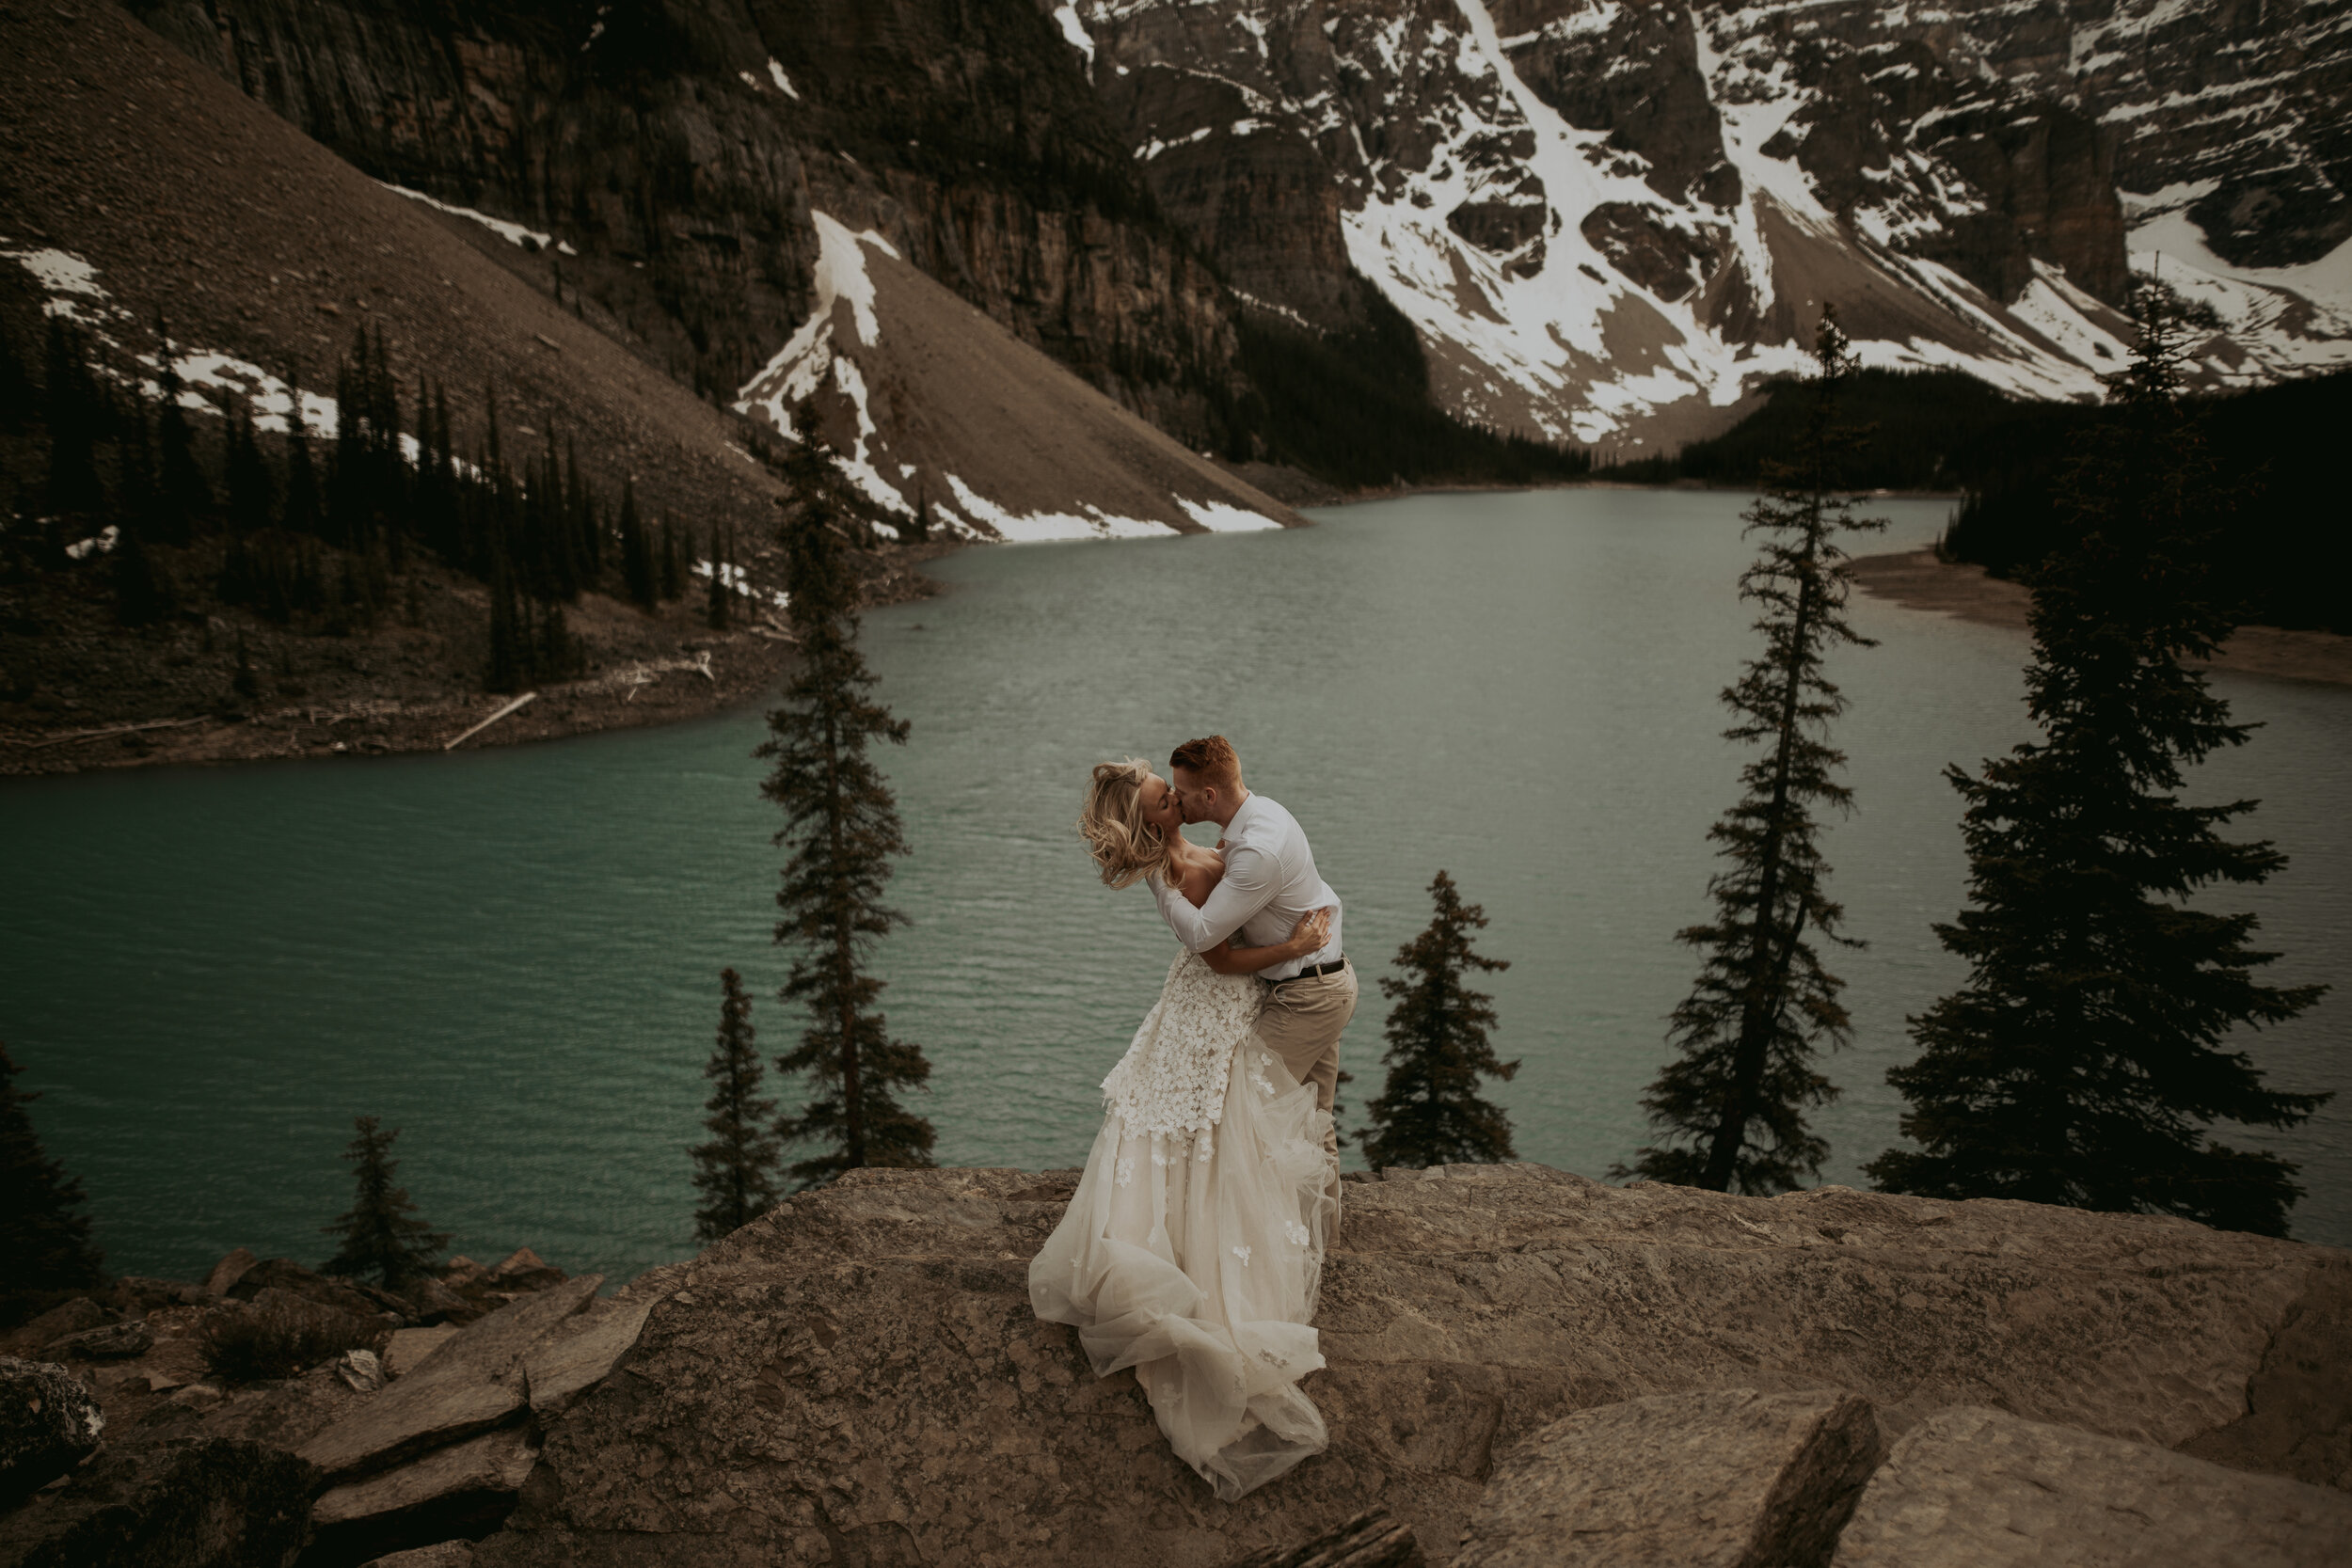 Calgary elopement, Calgary elopement photographer, Calgary wedding photography, Calgary elopement photography